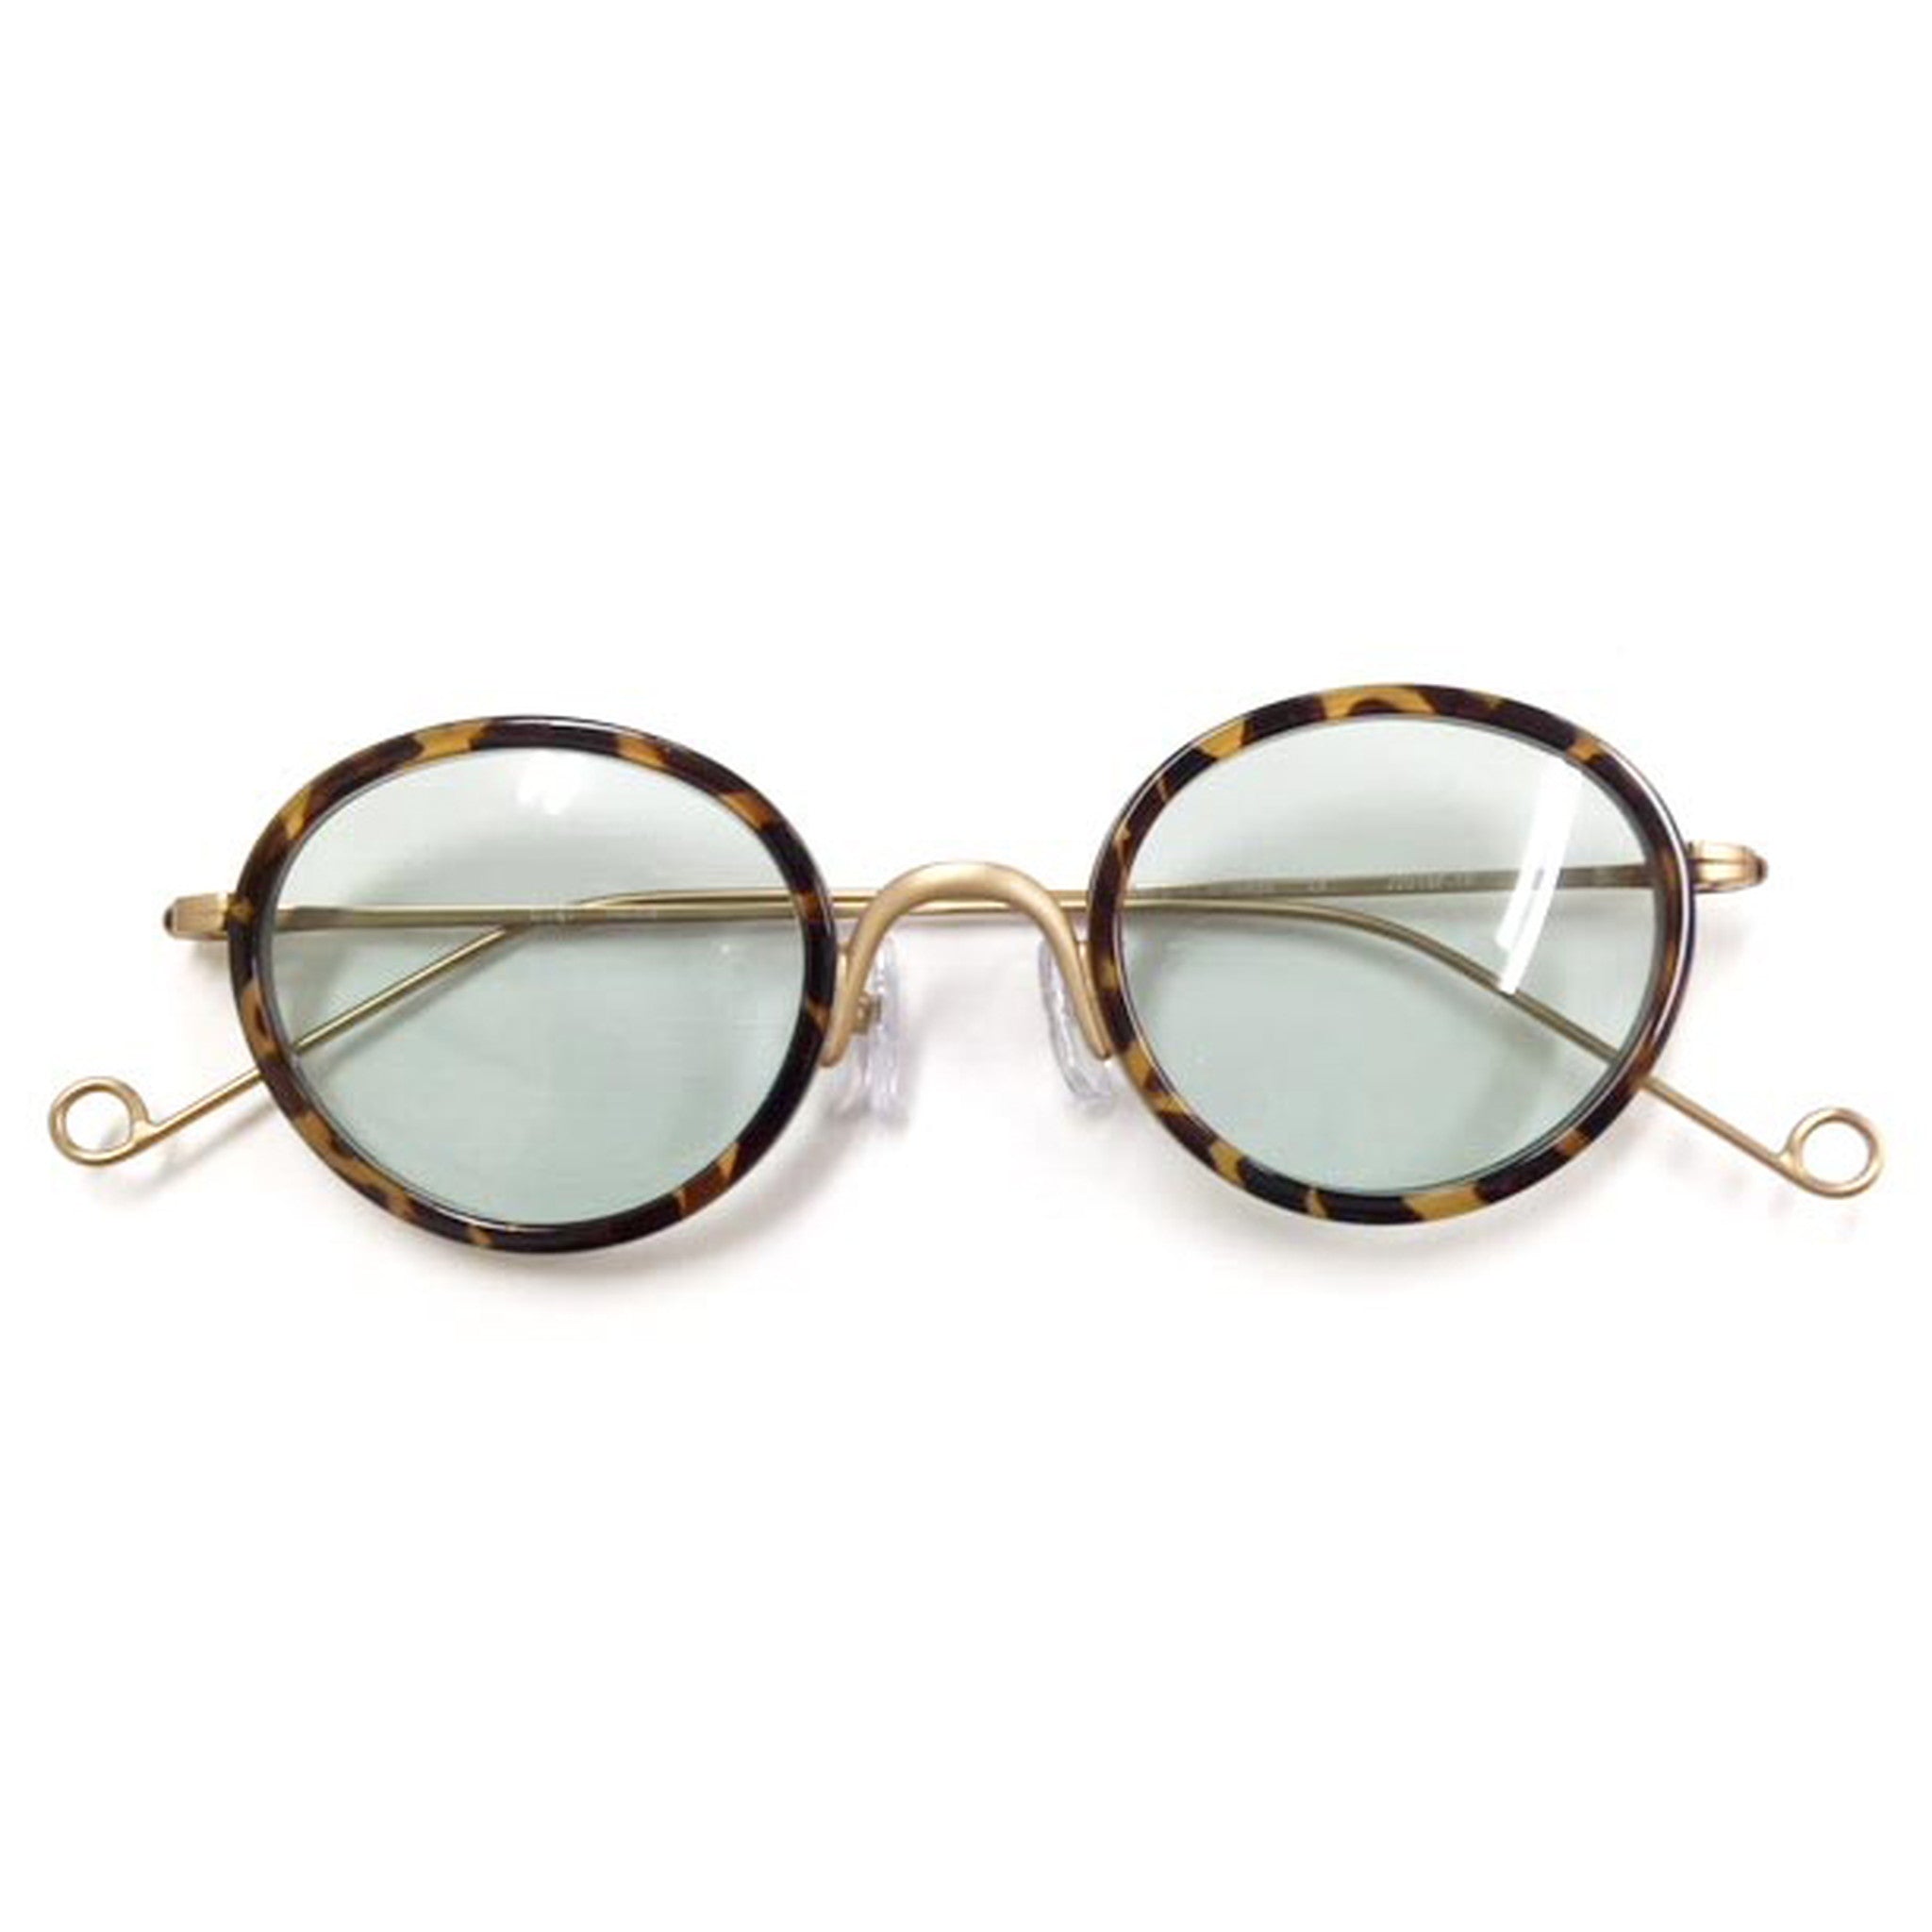 【Ciqi】HERBIE サングラス Vintage Brown Light Green Lens Sunglasses(ハービー ビンテージブラウン ライトグリーンレンズ)